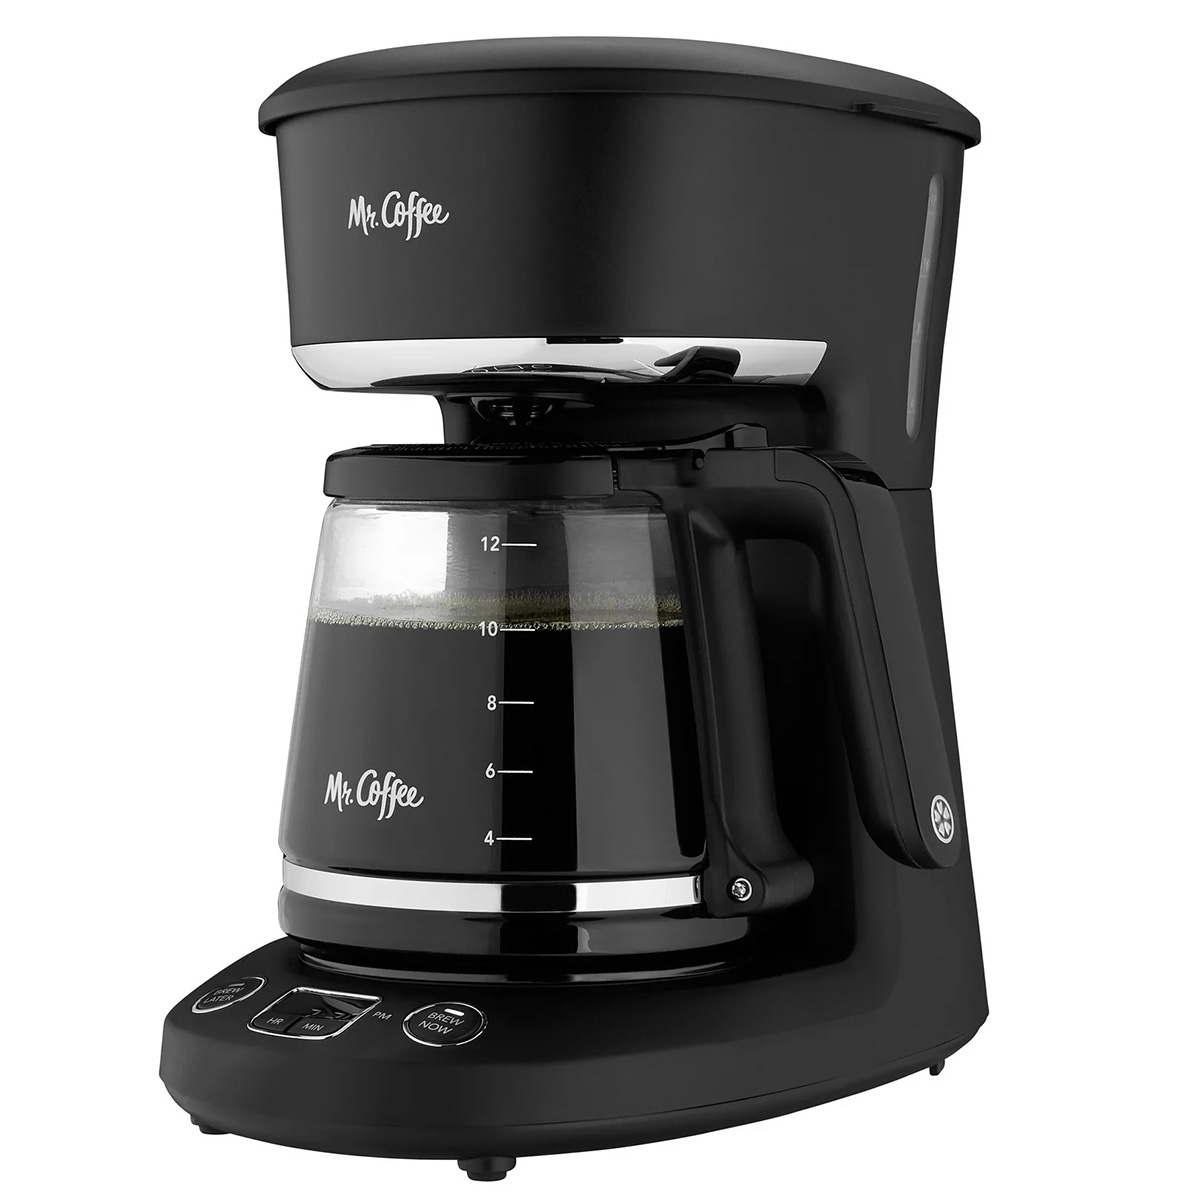 Mr. Coffee(R) 12 Cup Programmable Drip Coffeemaker W/ Filter